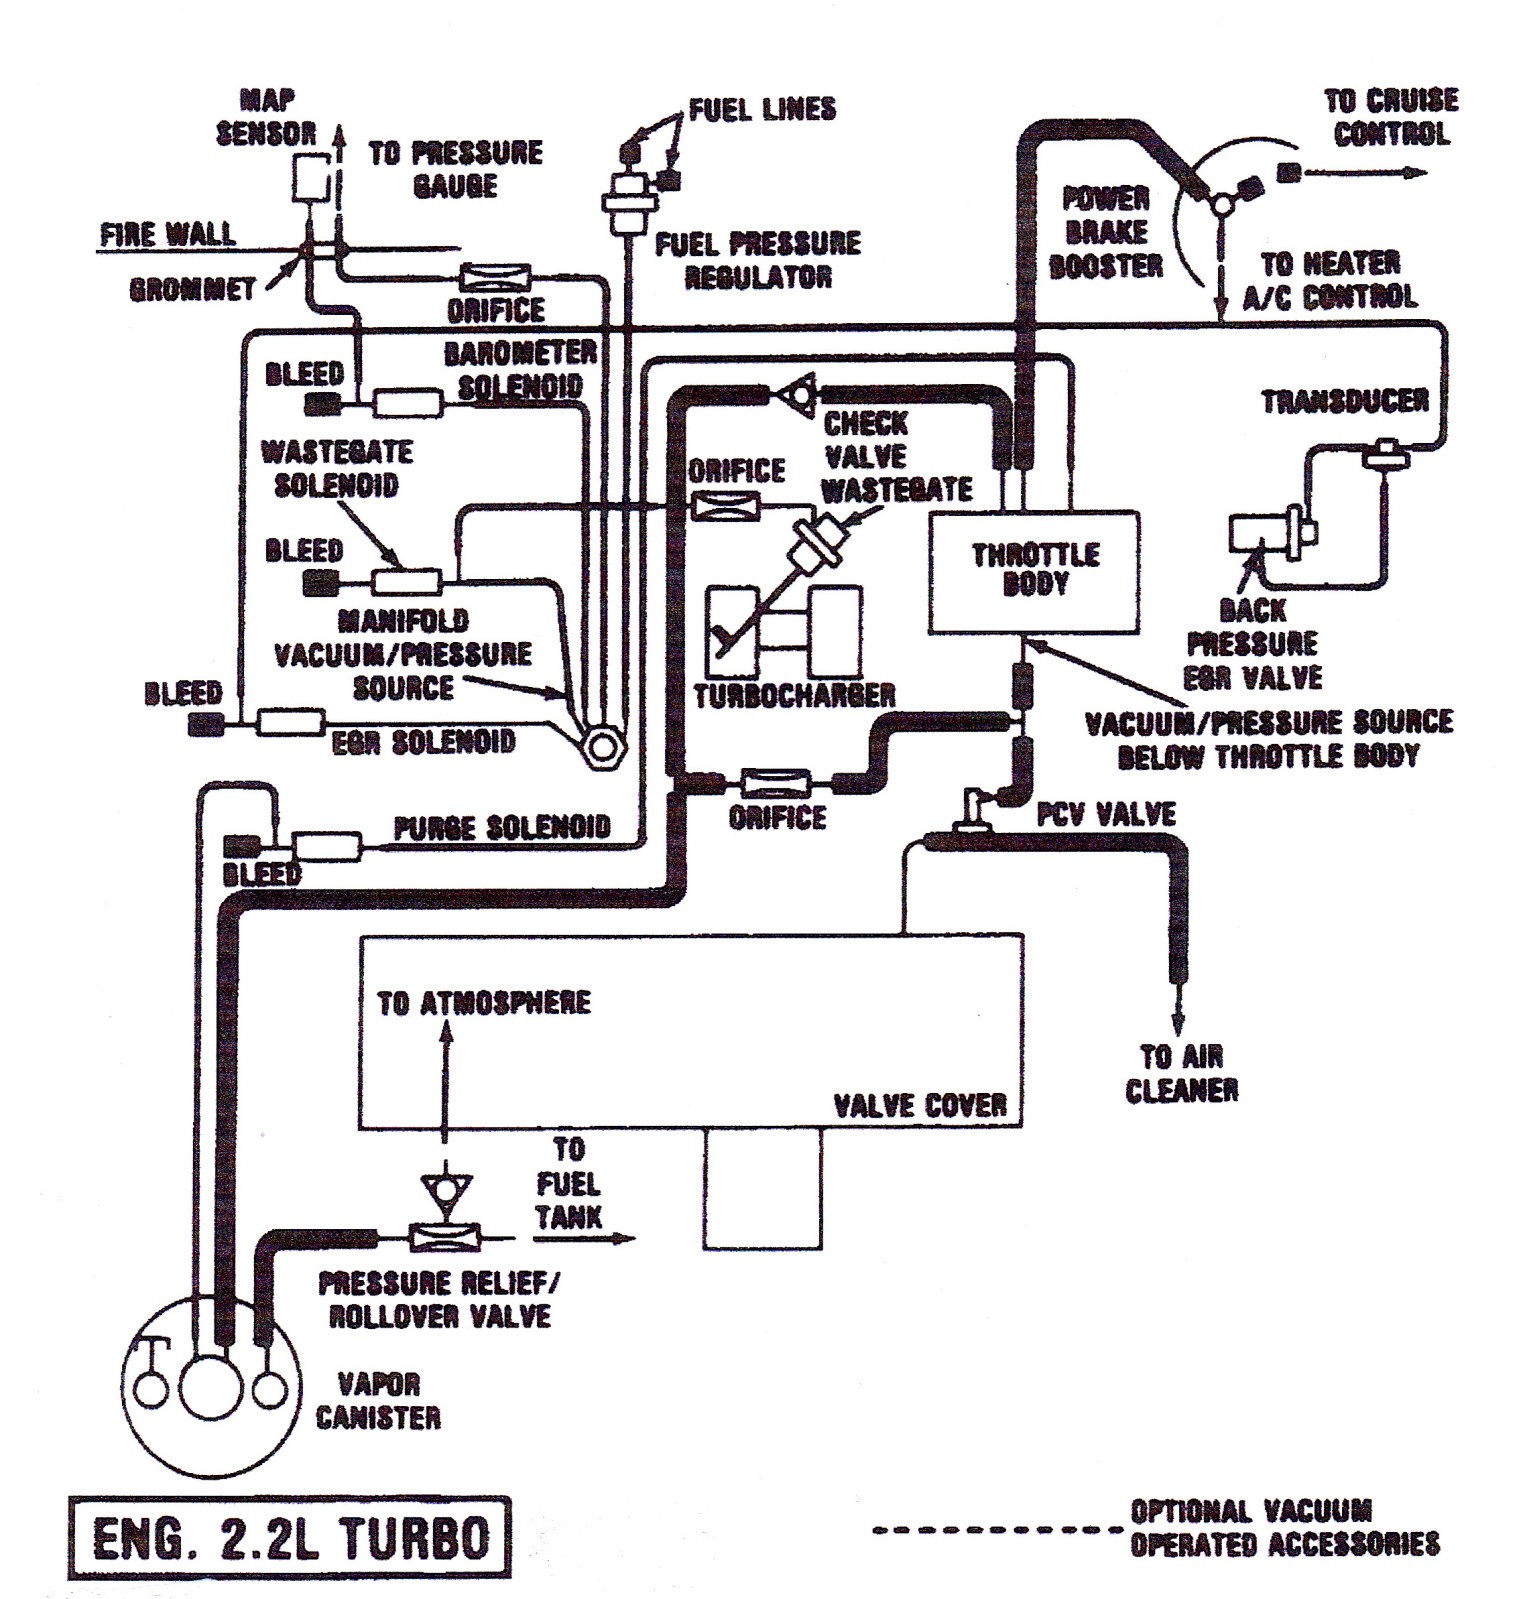 Twin Turbocharger Diagram Amazing Turbocharger Wastegate Diagram Ideas Electrical Diagram Of Twin Turbocharger Diagram